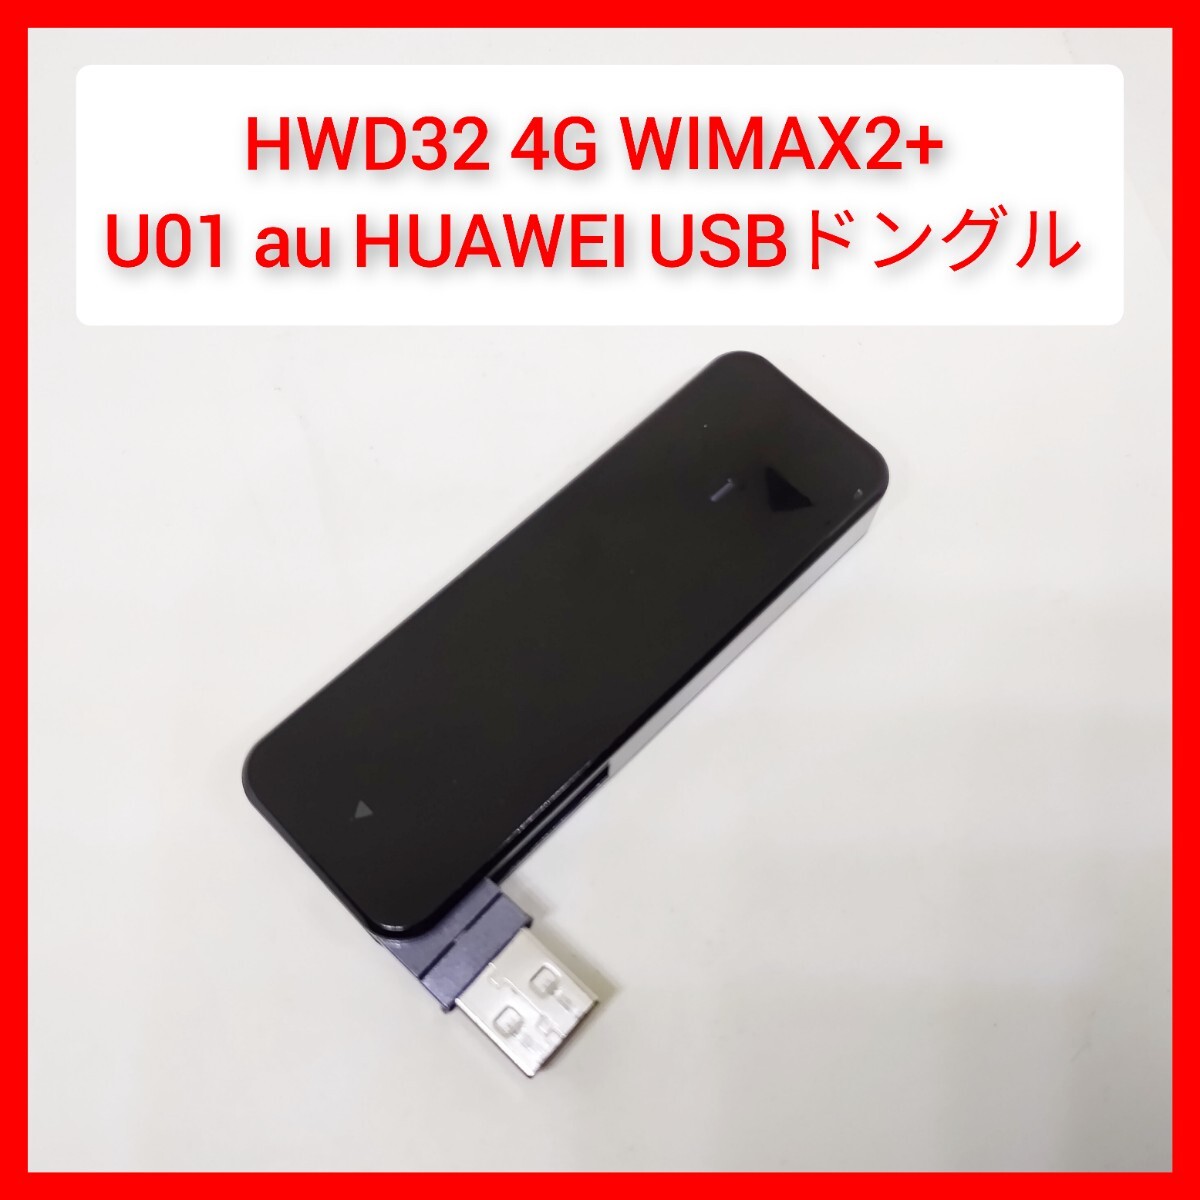 USBドングル HWD32 U01 au専用 USB stick HUAWEI データ通信端末 USB stick ビジネス端末 PC常時接続_画像1